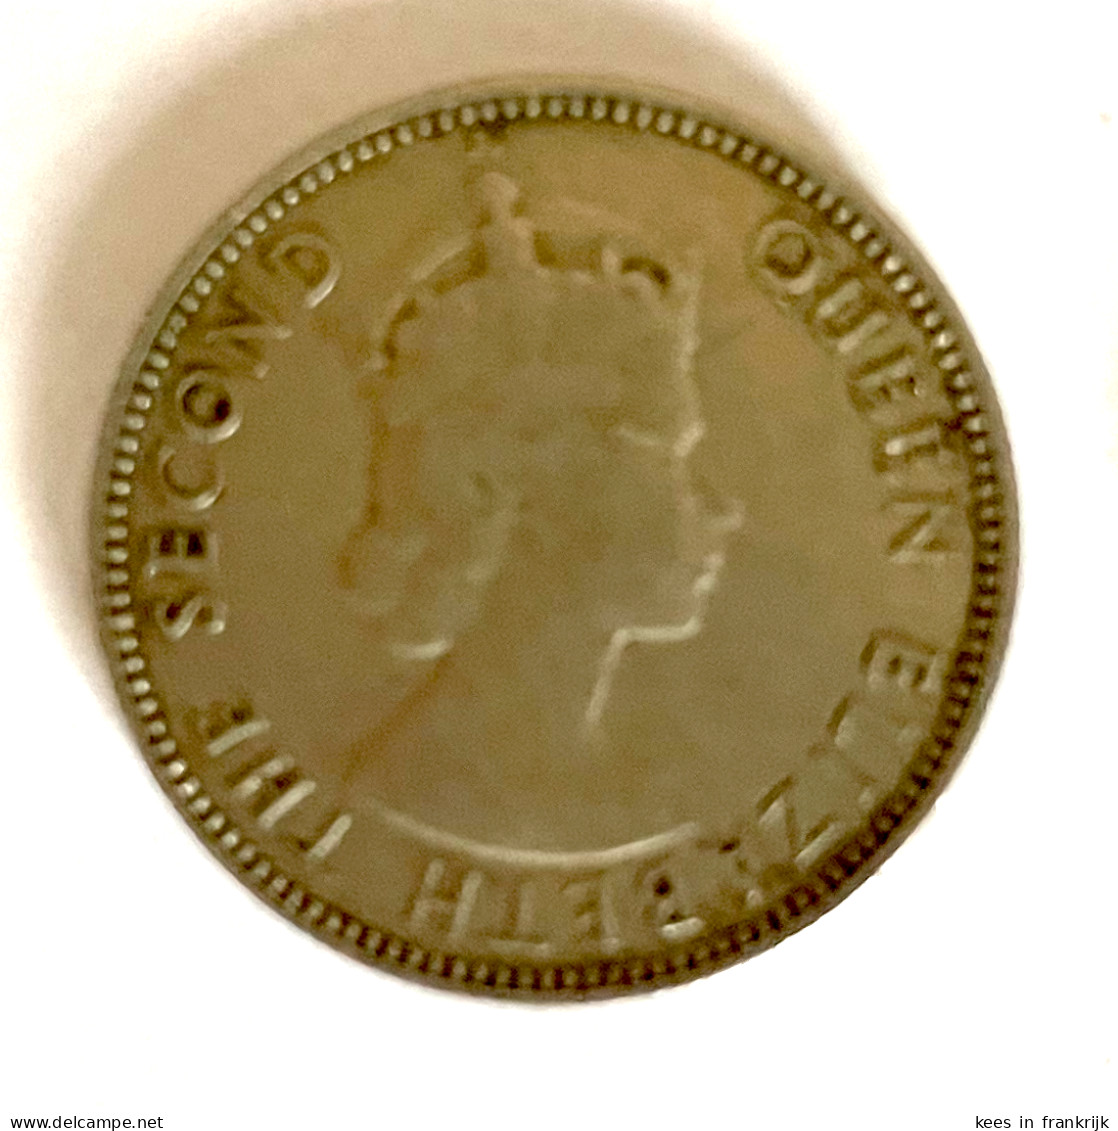 East Africa / Afrique Orientale - 50 Cents 1954 - Queen Elizabeth II - British Colony